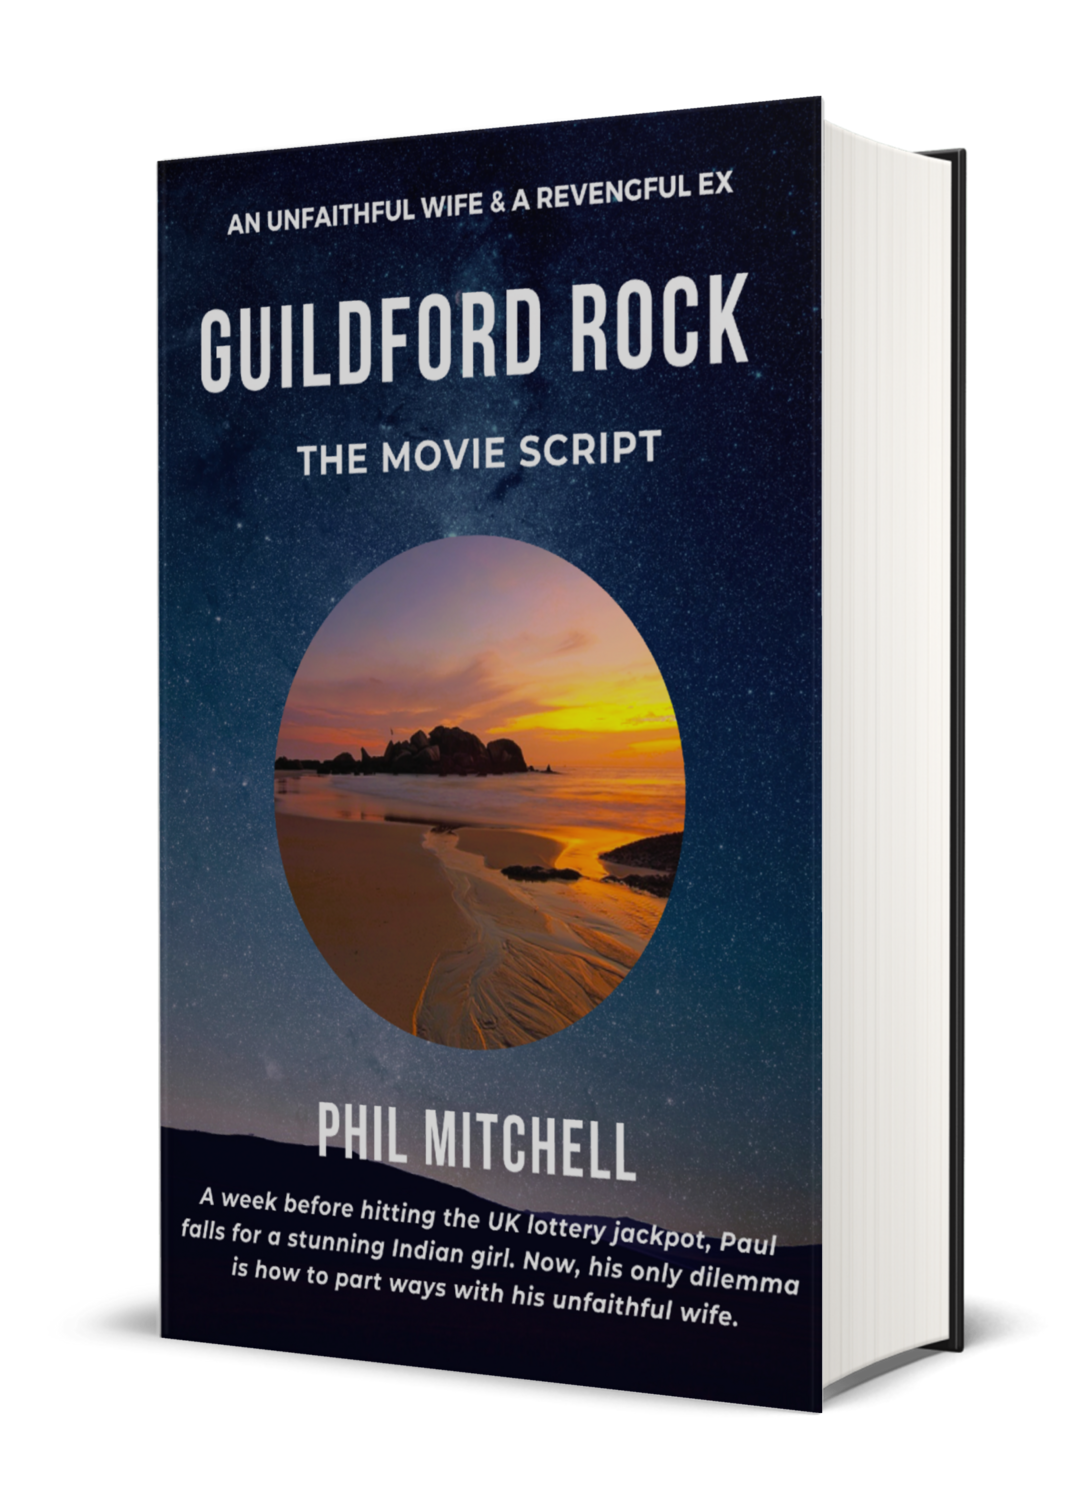 eBook: "Guildford Rock: The Movie Script"